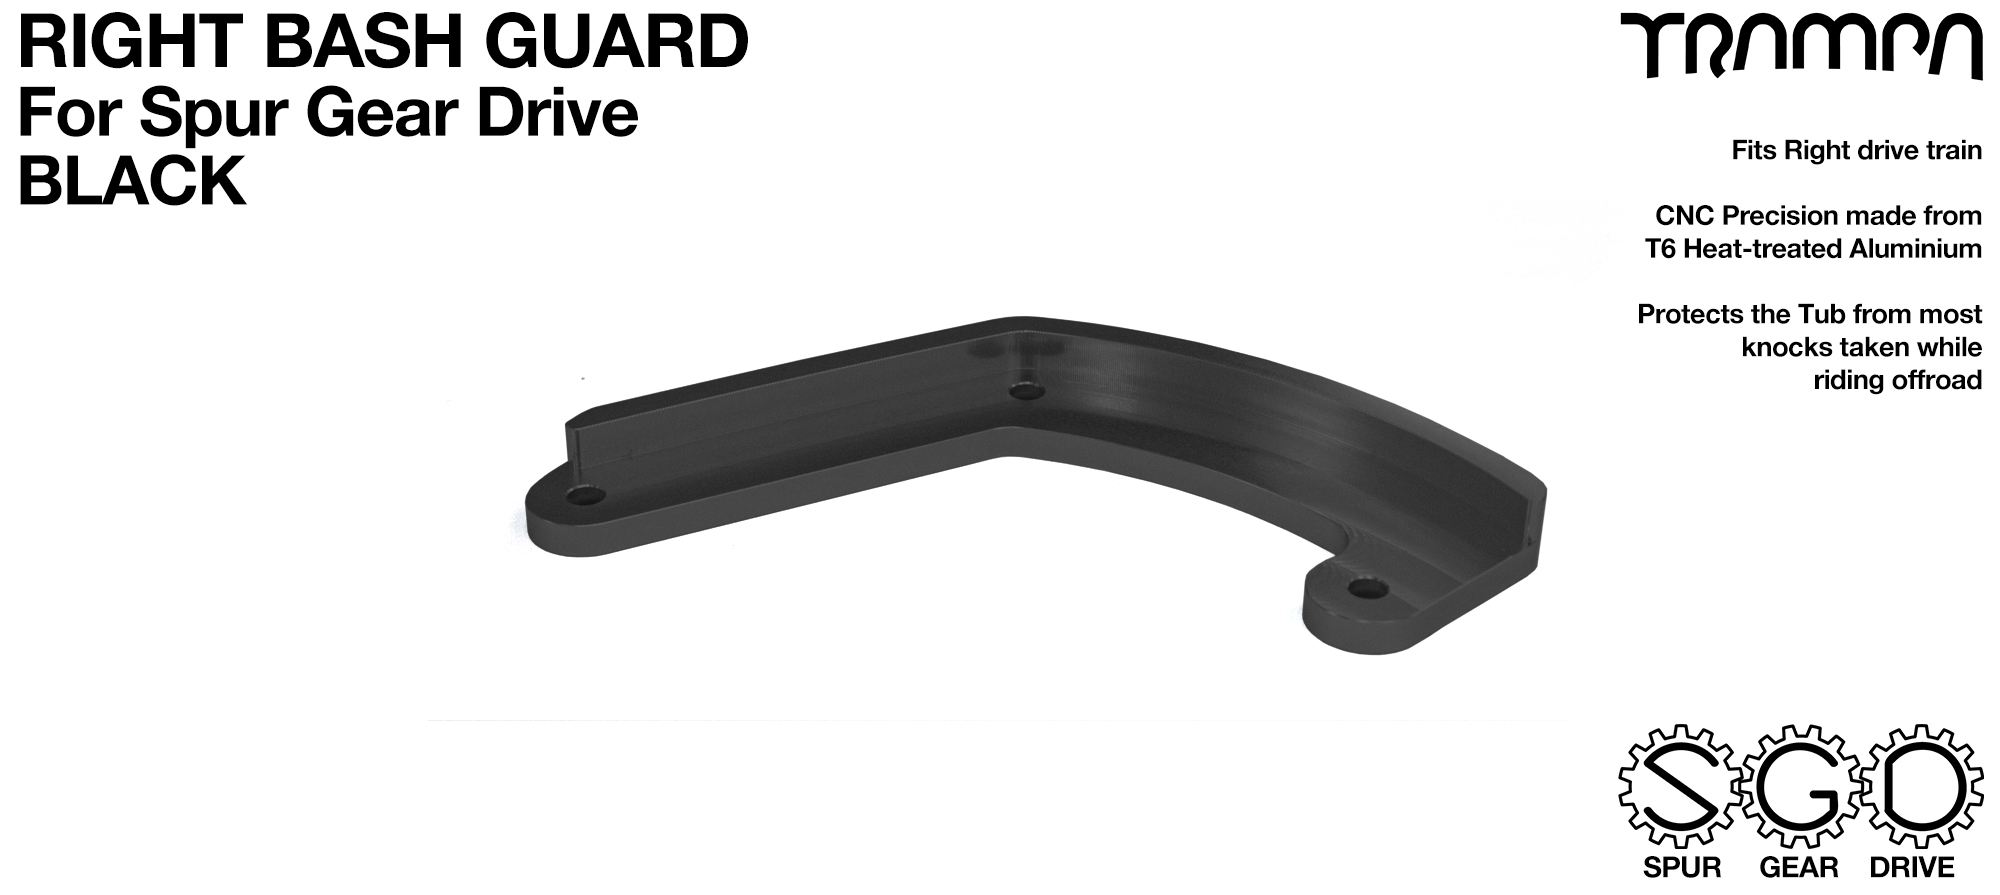 SPUR Gear Drive Bash Guard - RIGHT Side - BLACK